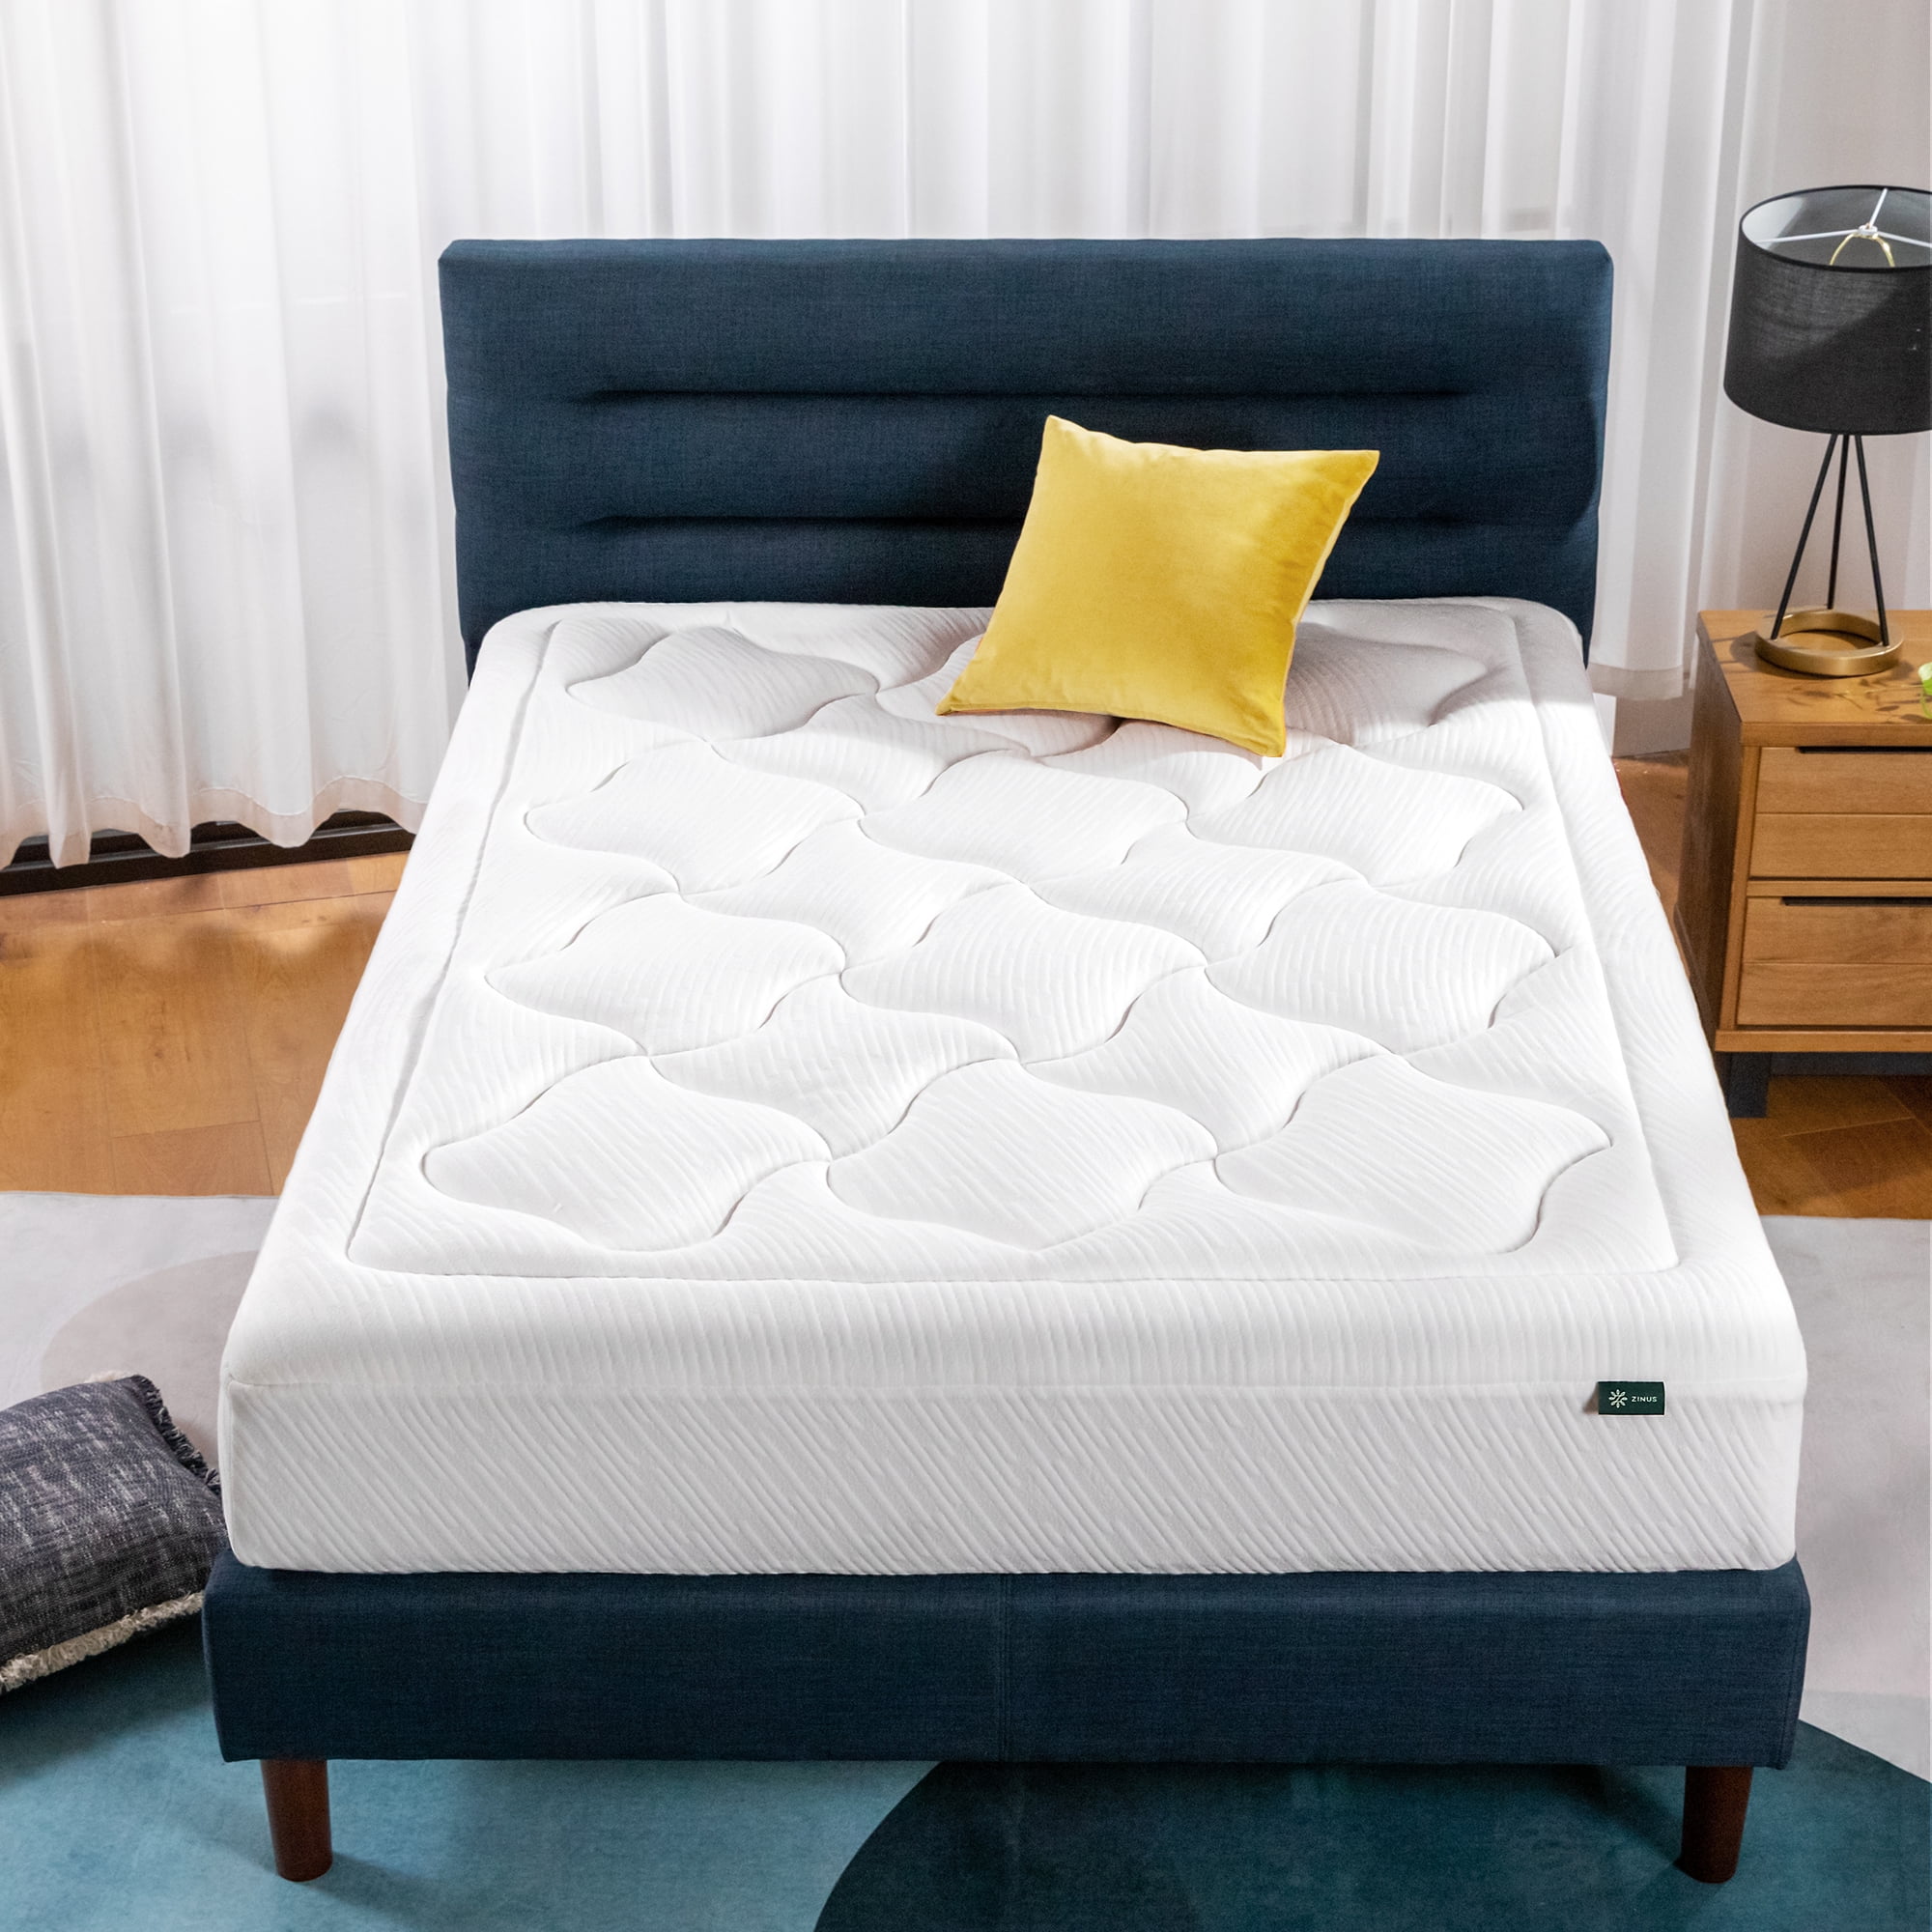 Details about   Full Size Mattress Gel Memory Foam Mattress Bed In A Box 6in,8in,10in Full Size 